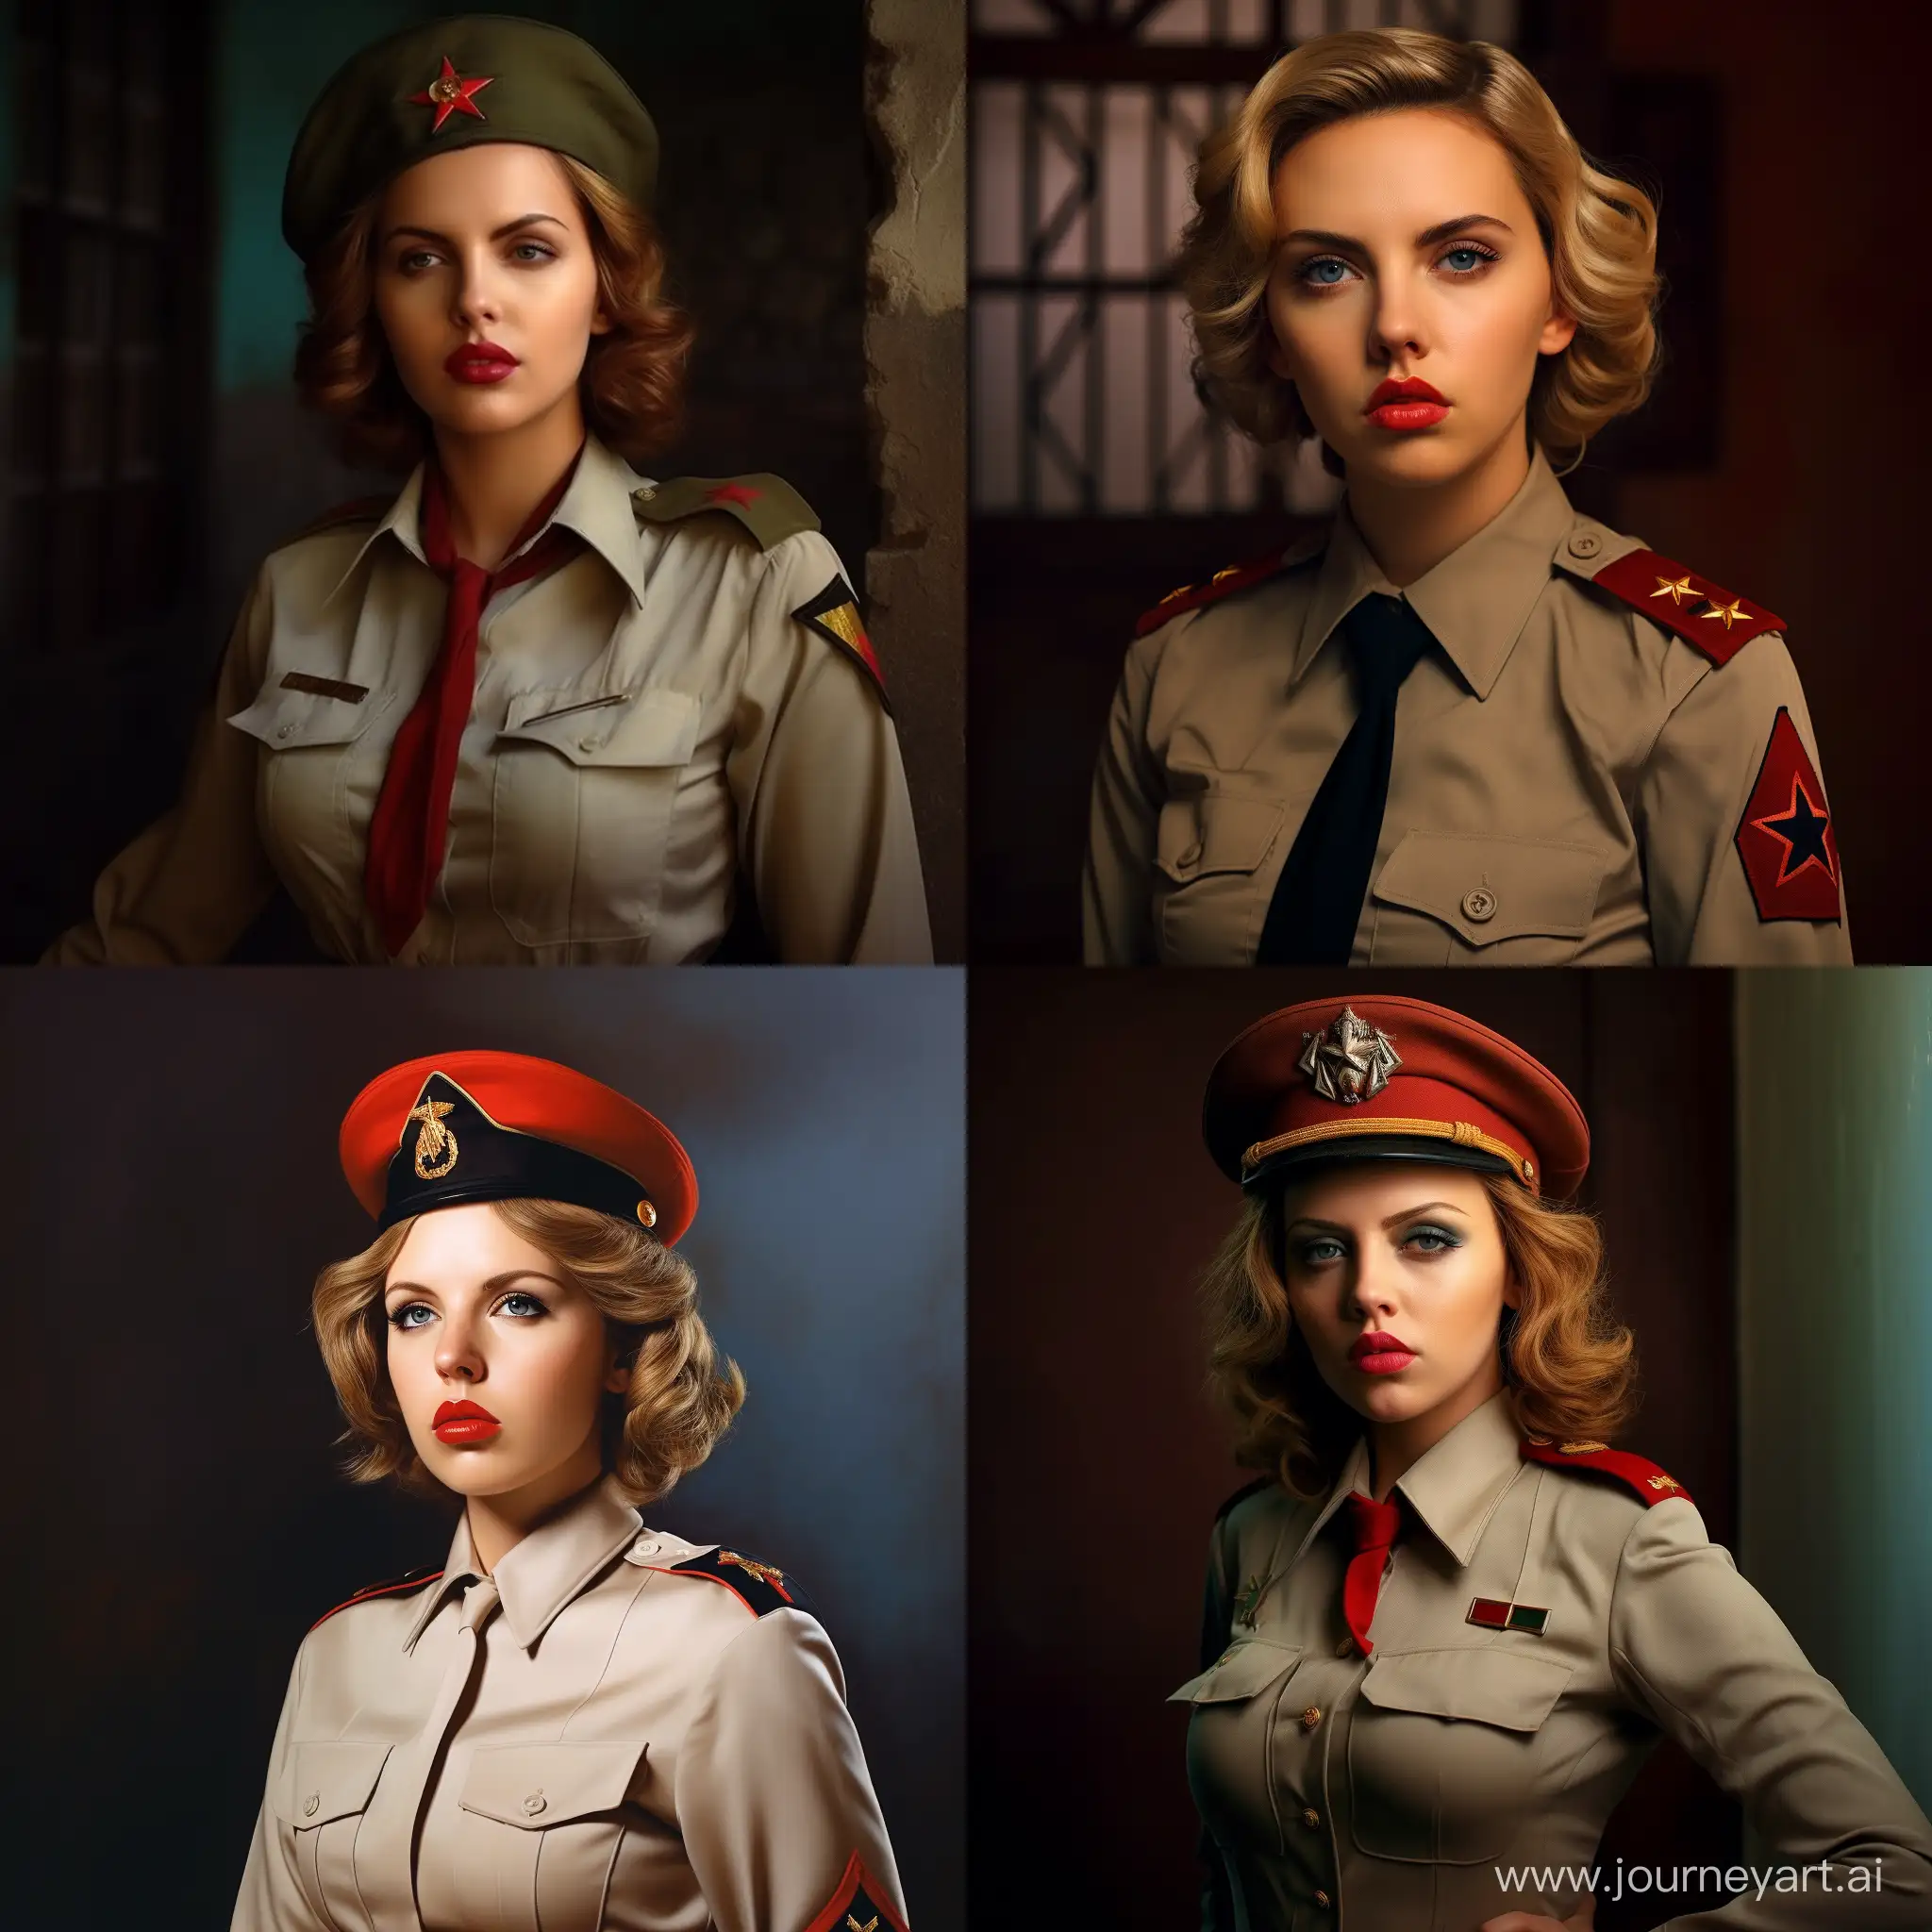 Revolutionary-Scarlett-Johansson-in-Cuban-Uniform-with-Cap